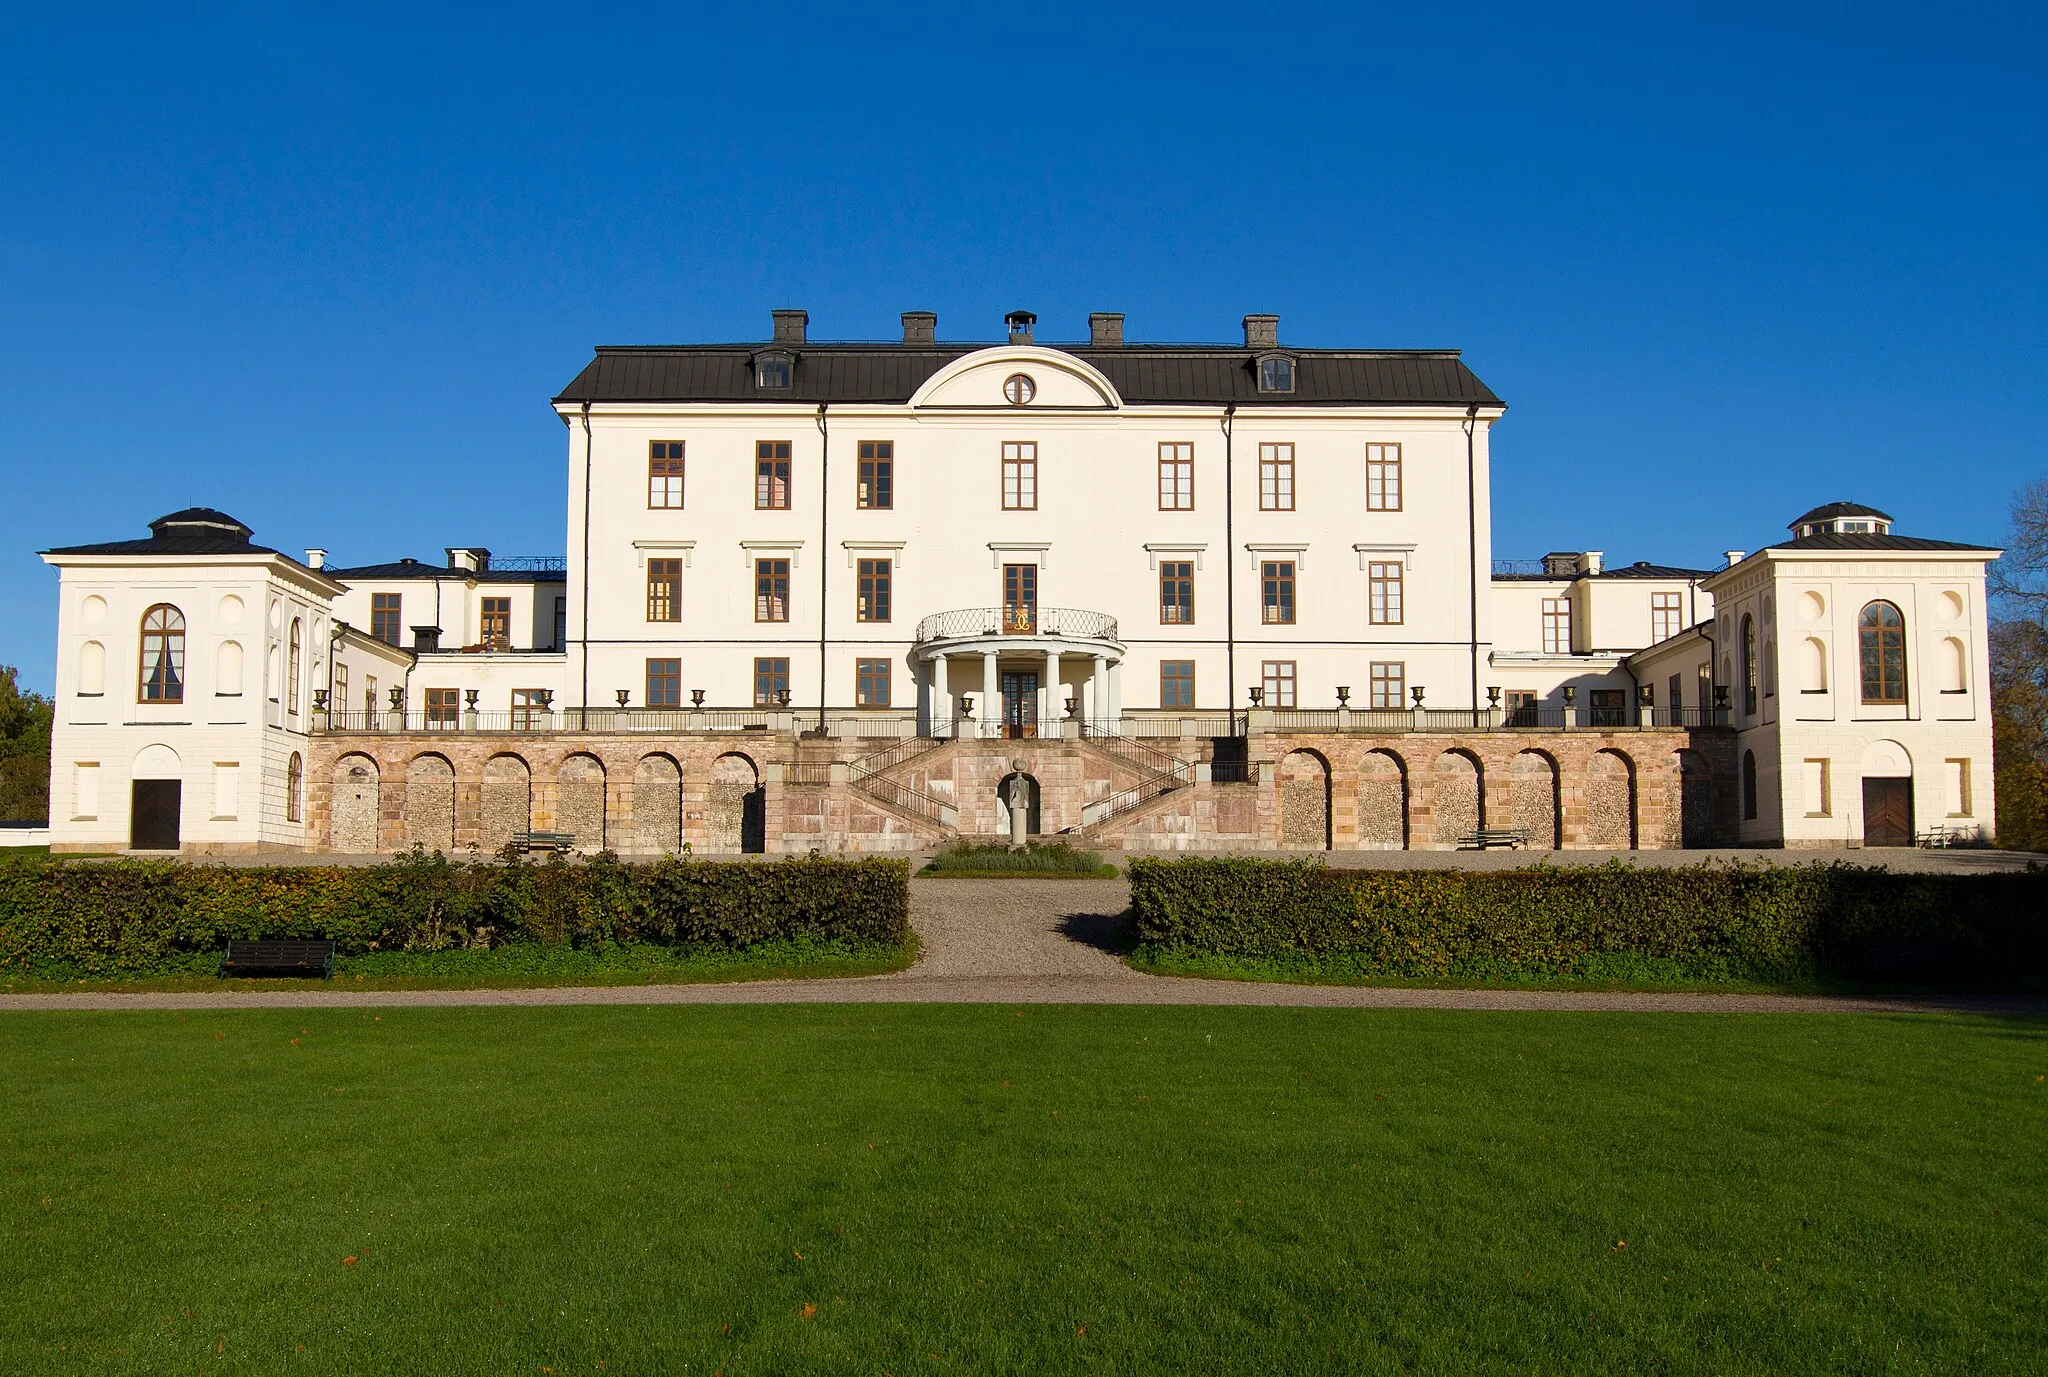 Photo showing: Rosersberg Palace, a royal palace just outside Rosersberg in Sigtuna Municipality, Sweden